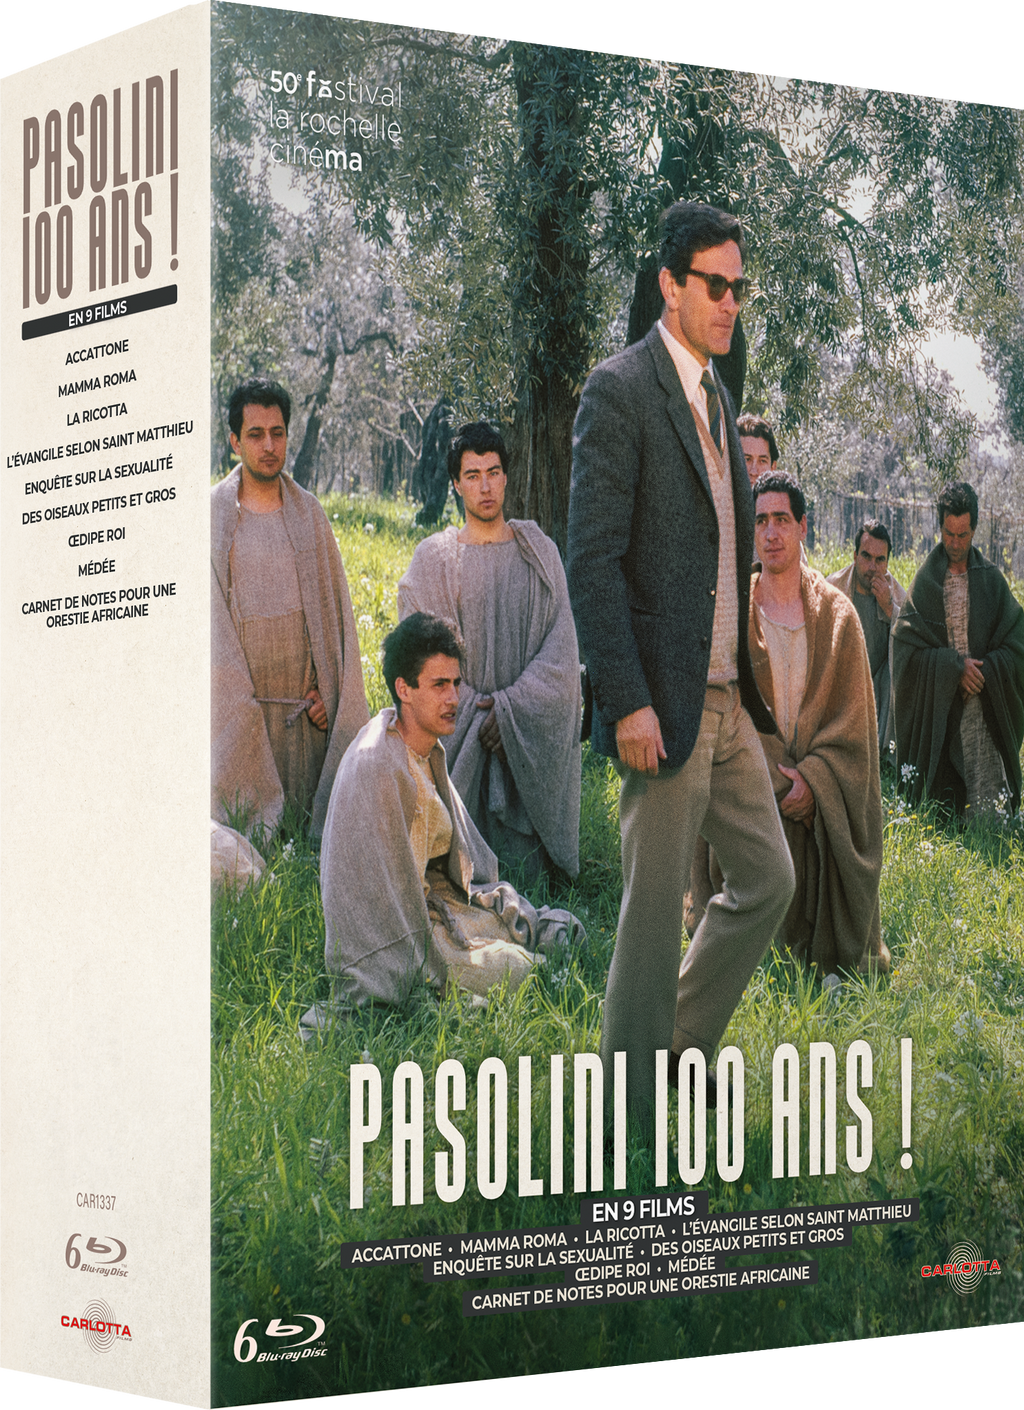 Pier Paolo Pasolini 100 years box set